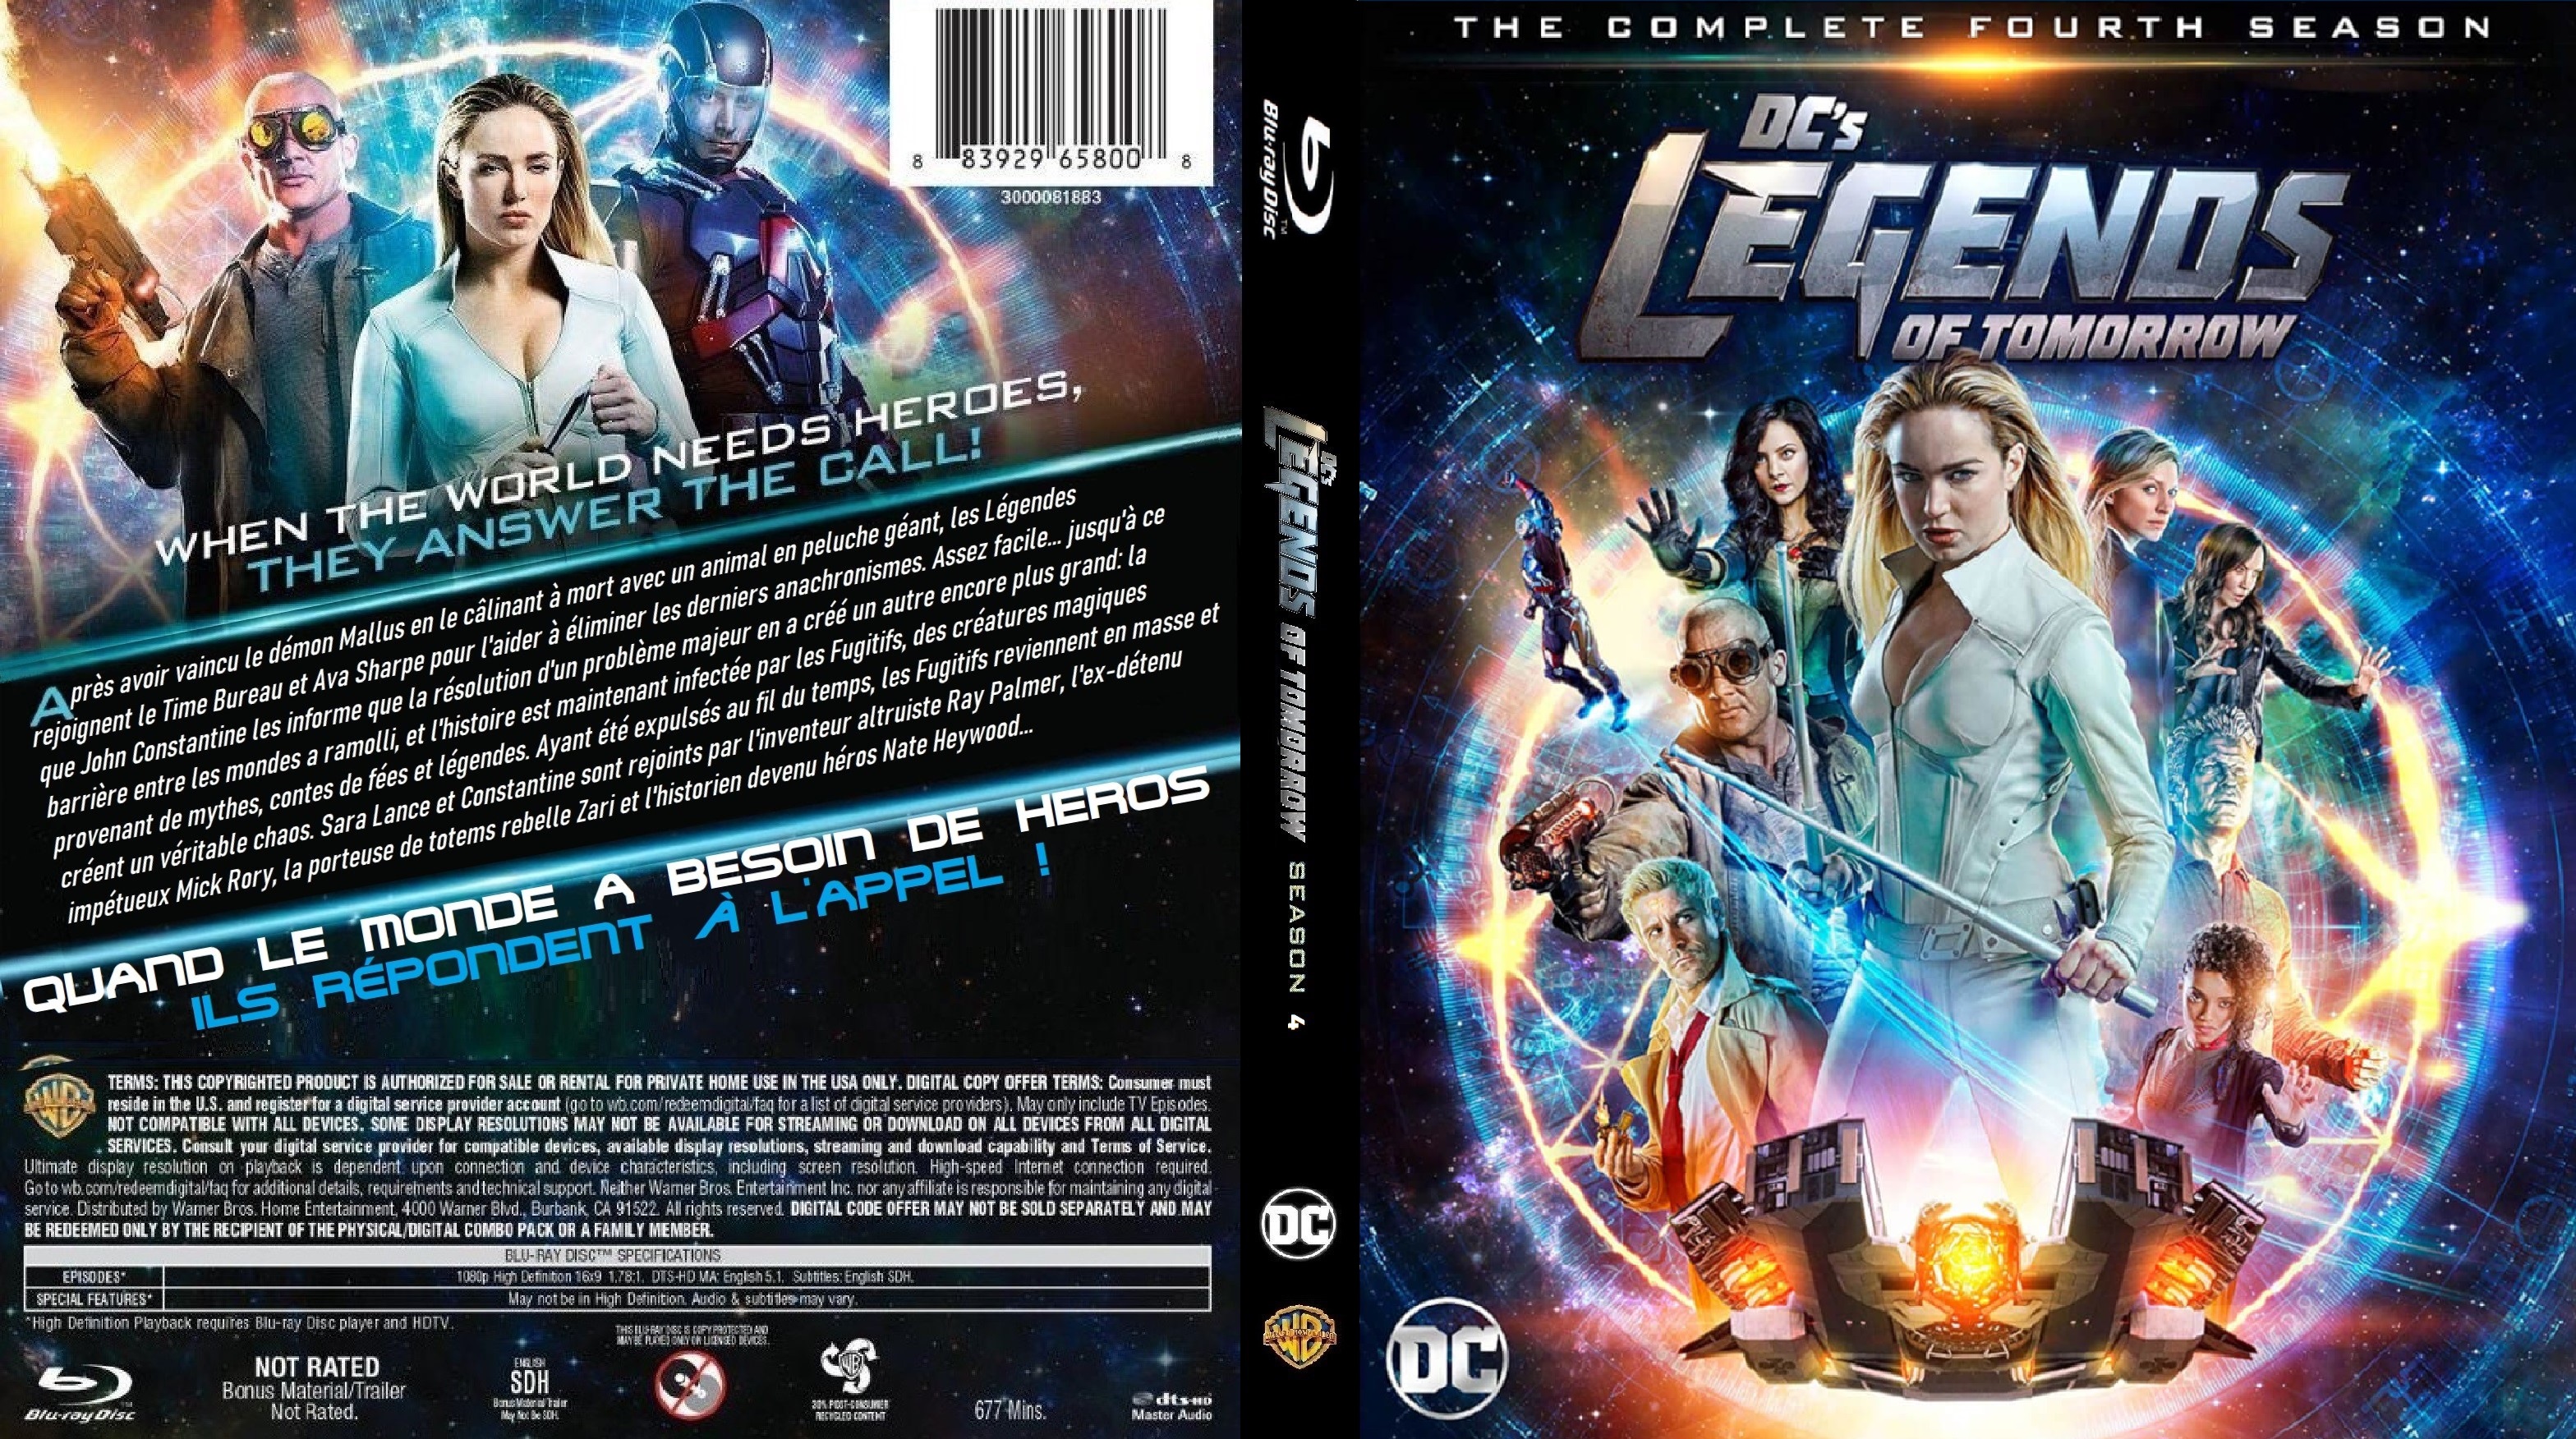 Jaquette DVD Legends of tomorrow saison 4 custom (BLU-RAY) v2